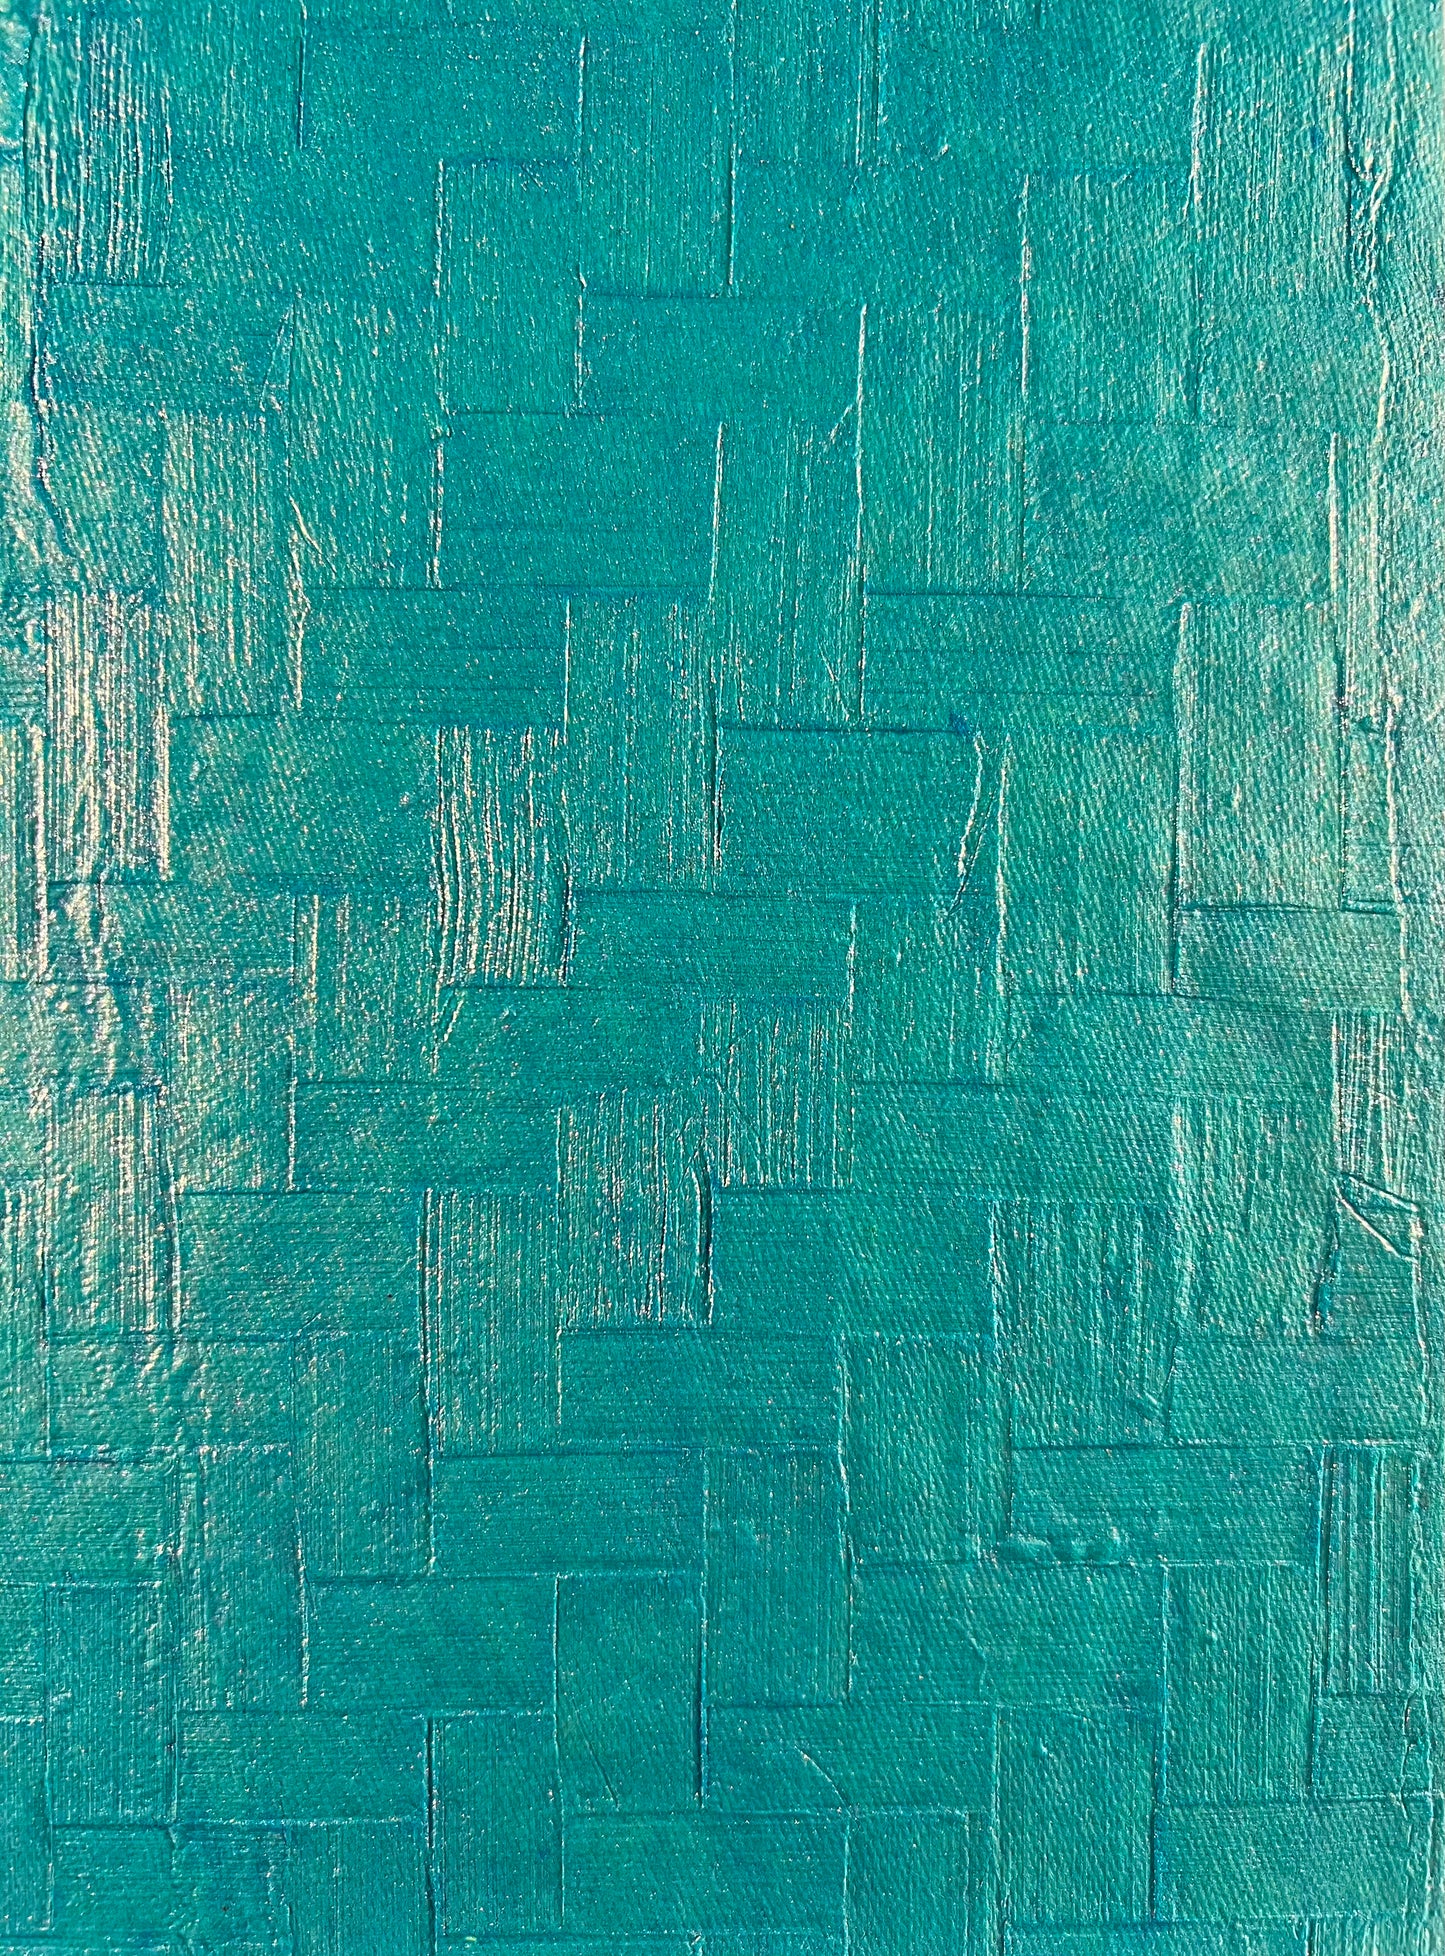 Handmade Paper - 1 x Weave Design - Cyan Blue